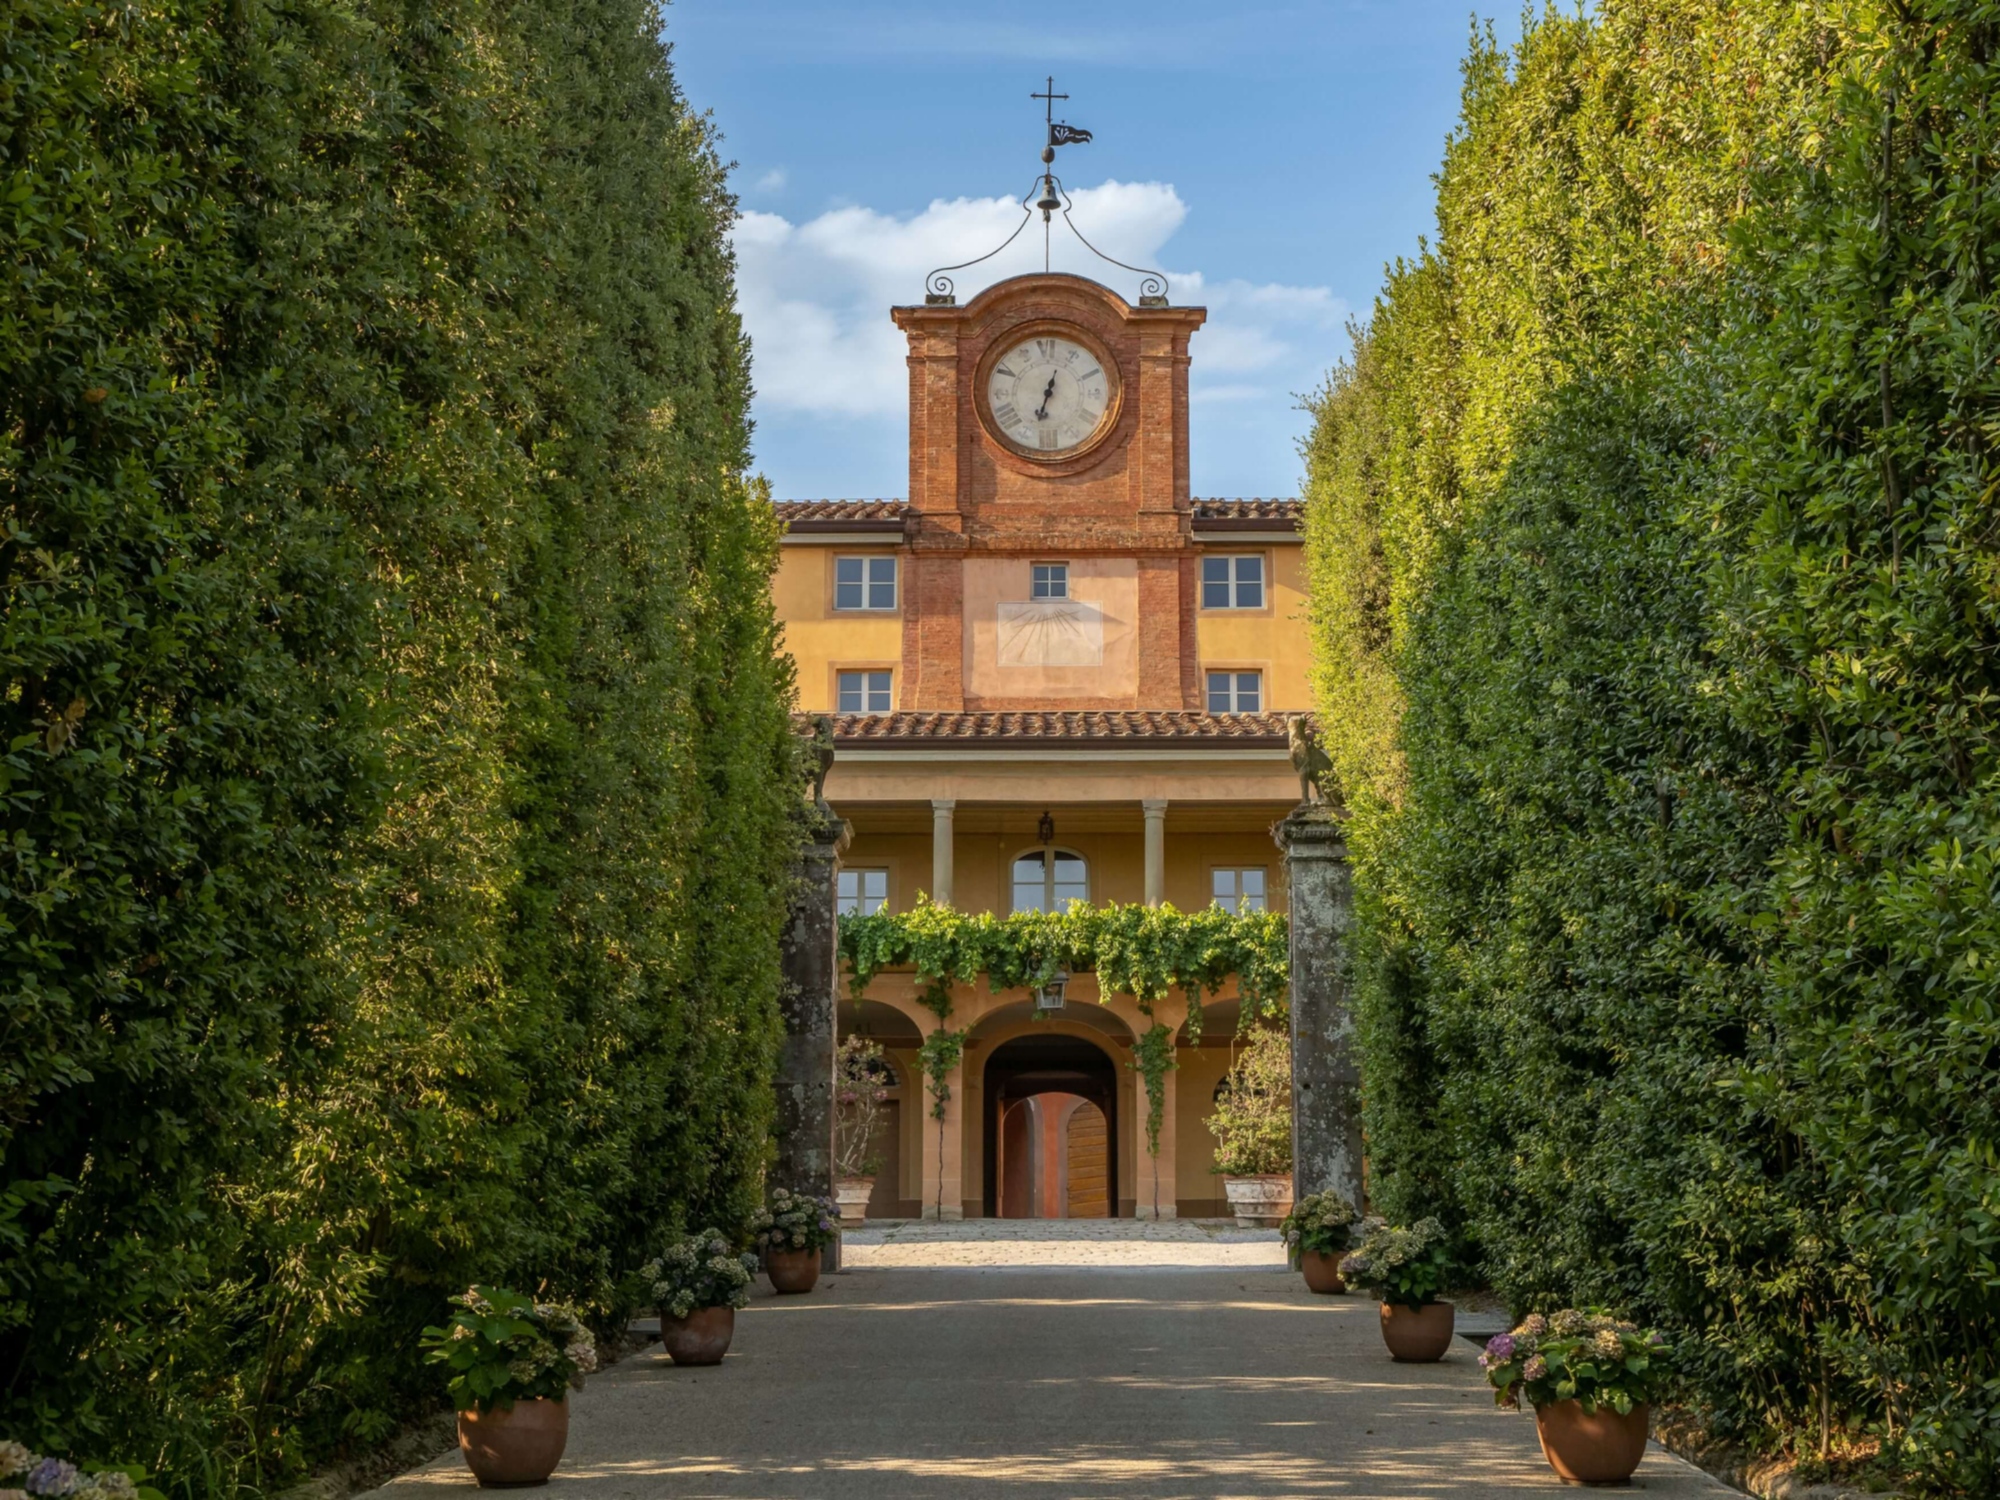 Entrance ticket to visit Villa Reale of Marlia